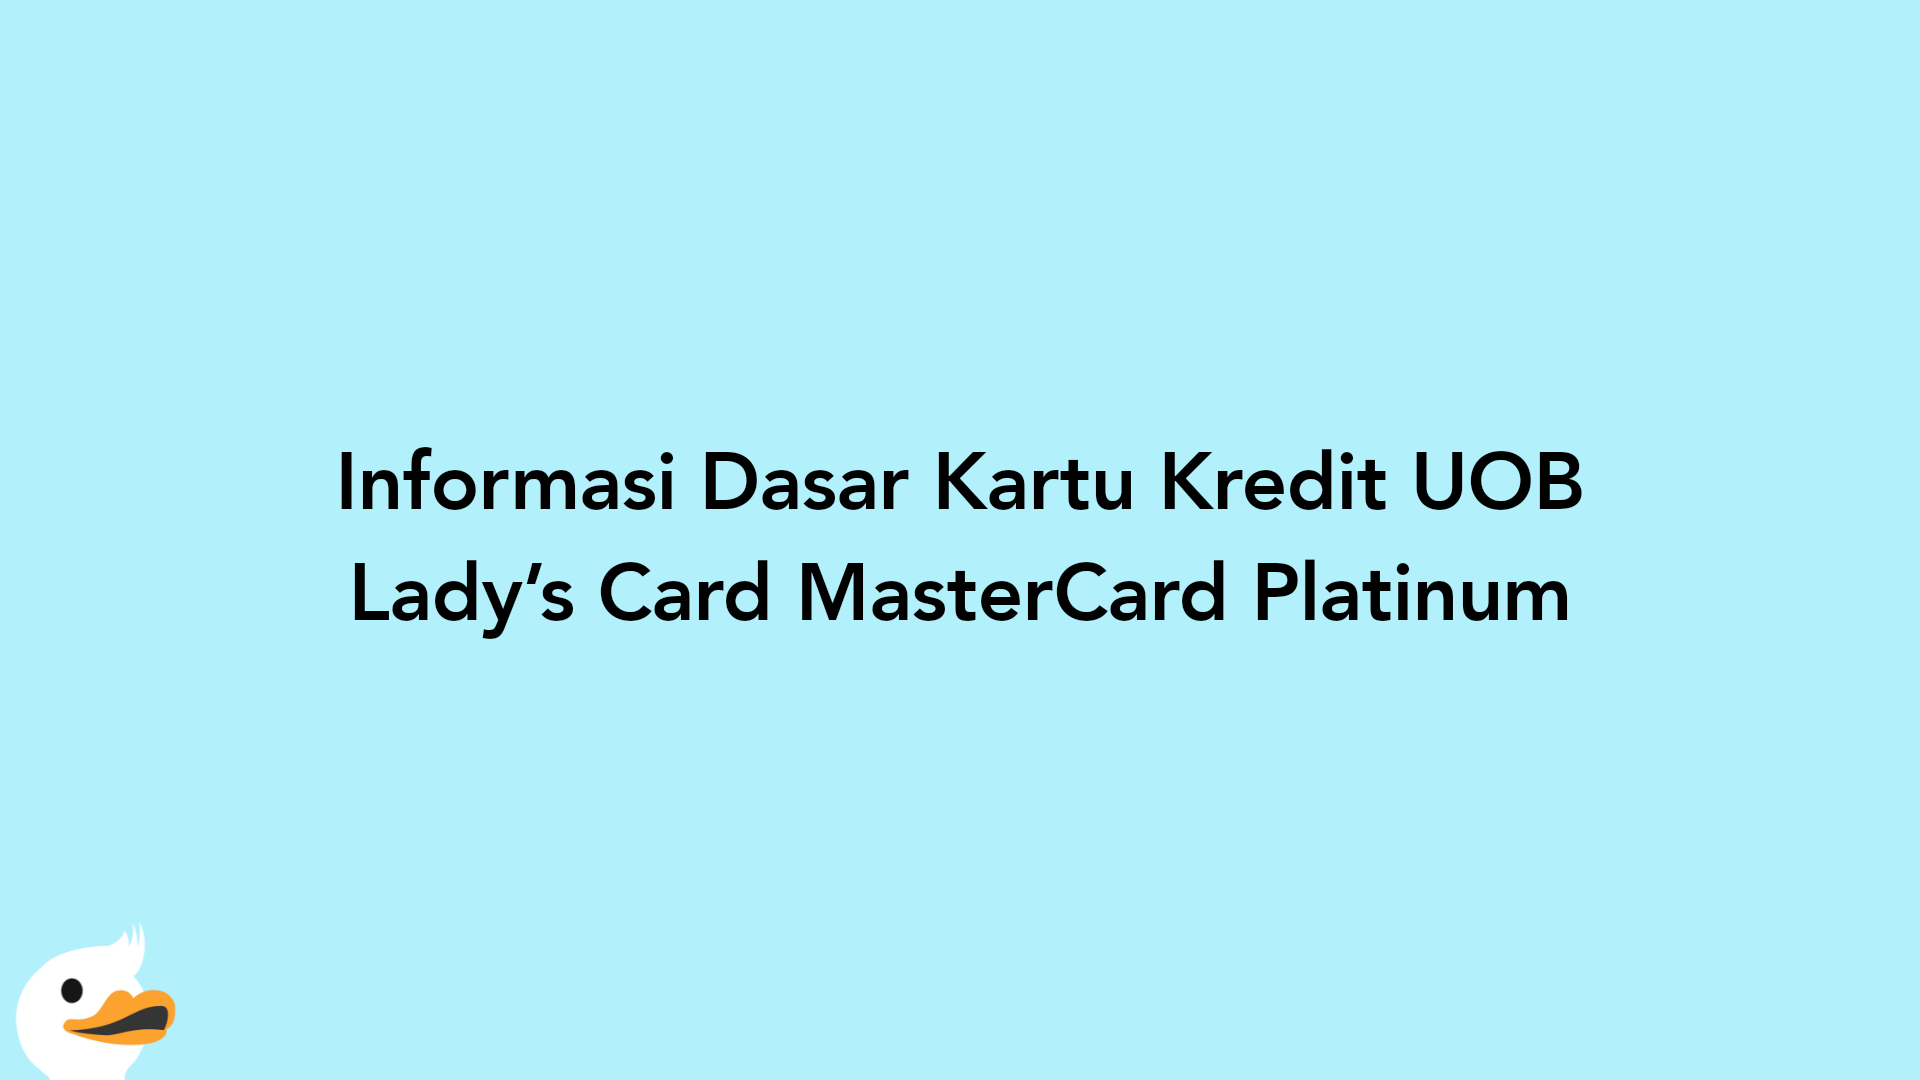 Informasi Dasar Kartu Kredit UOB Lady’s Card MasterCard Platinum